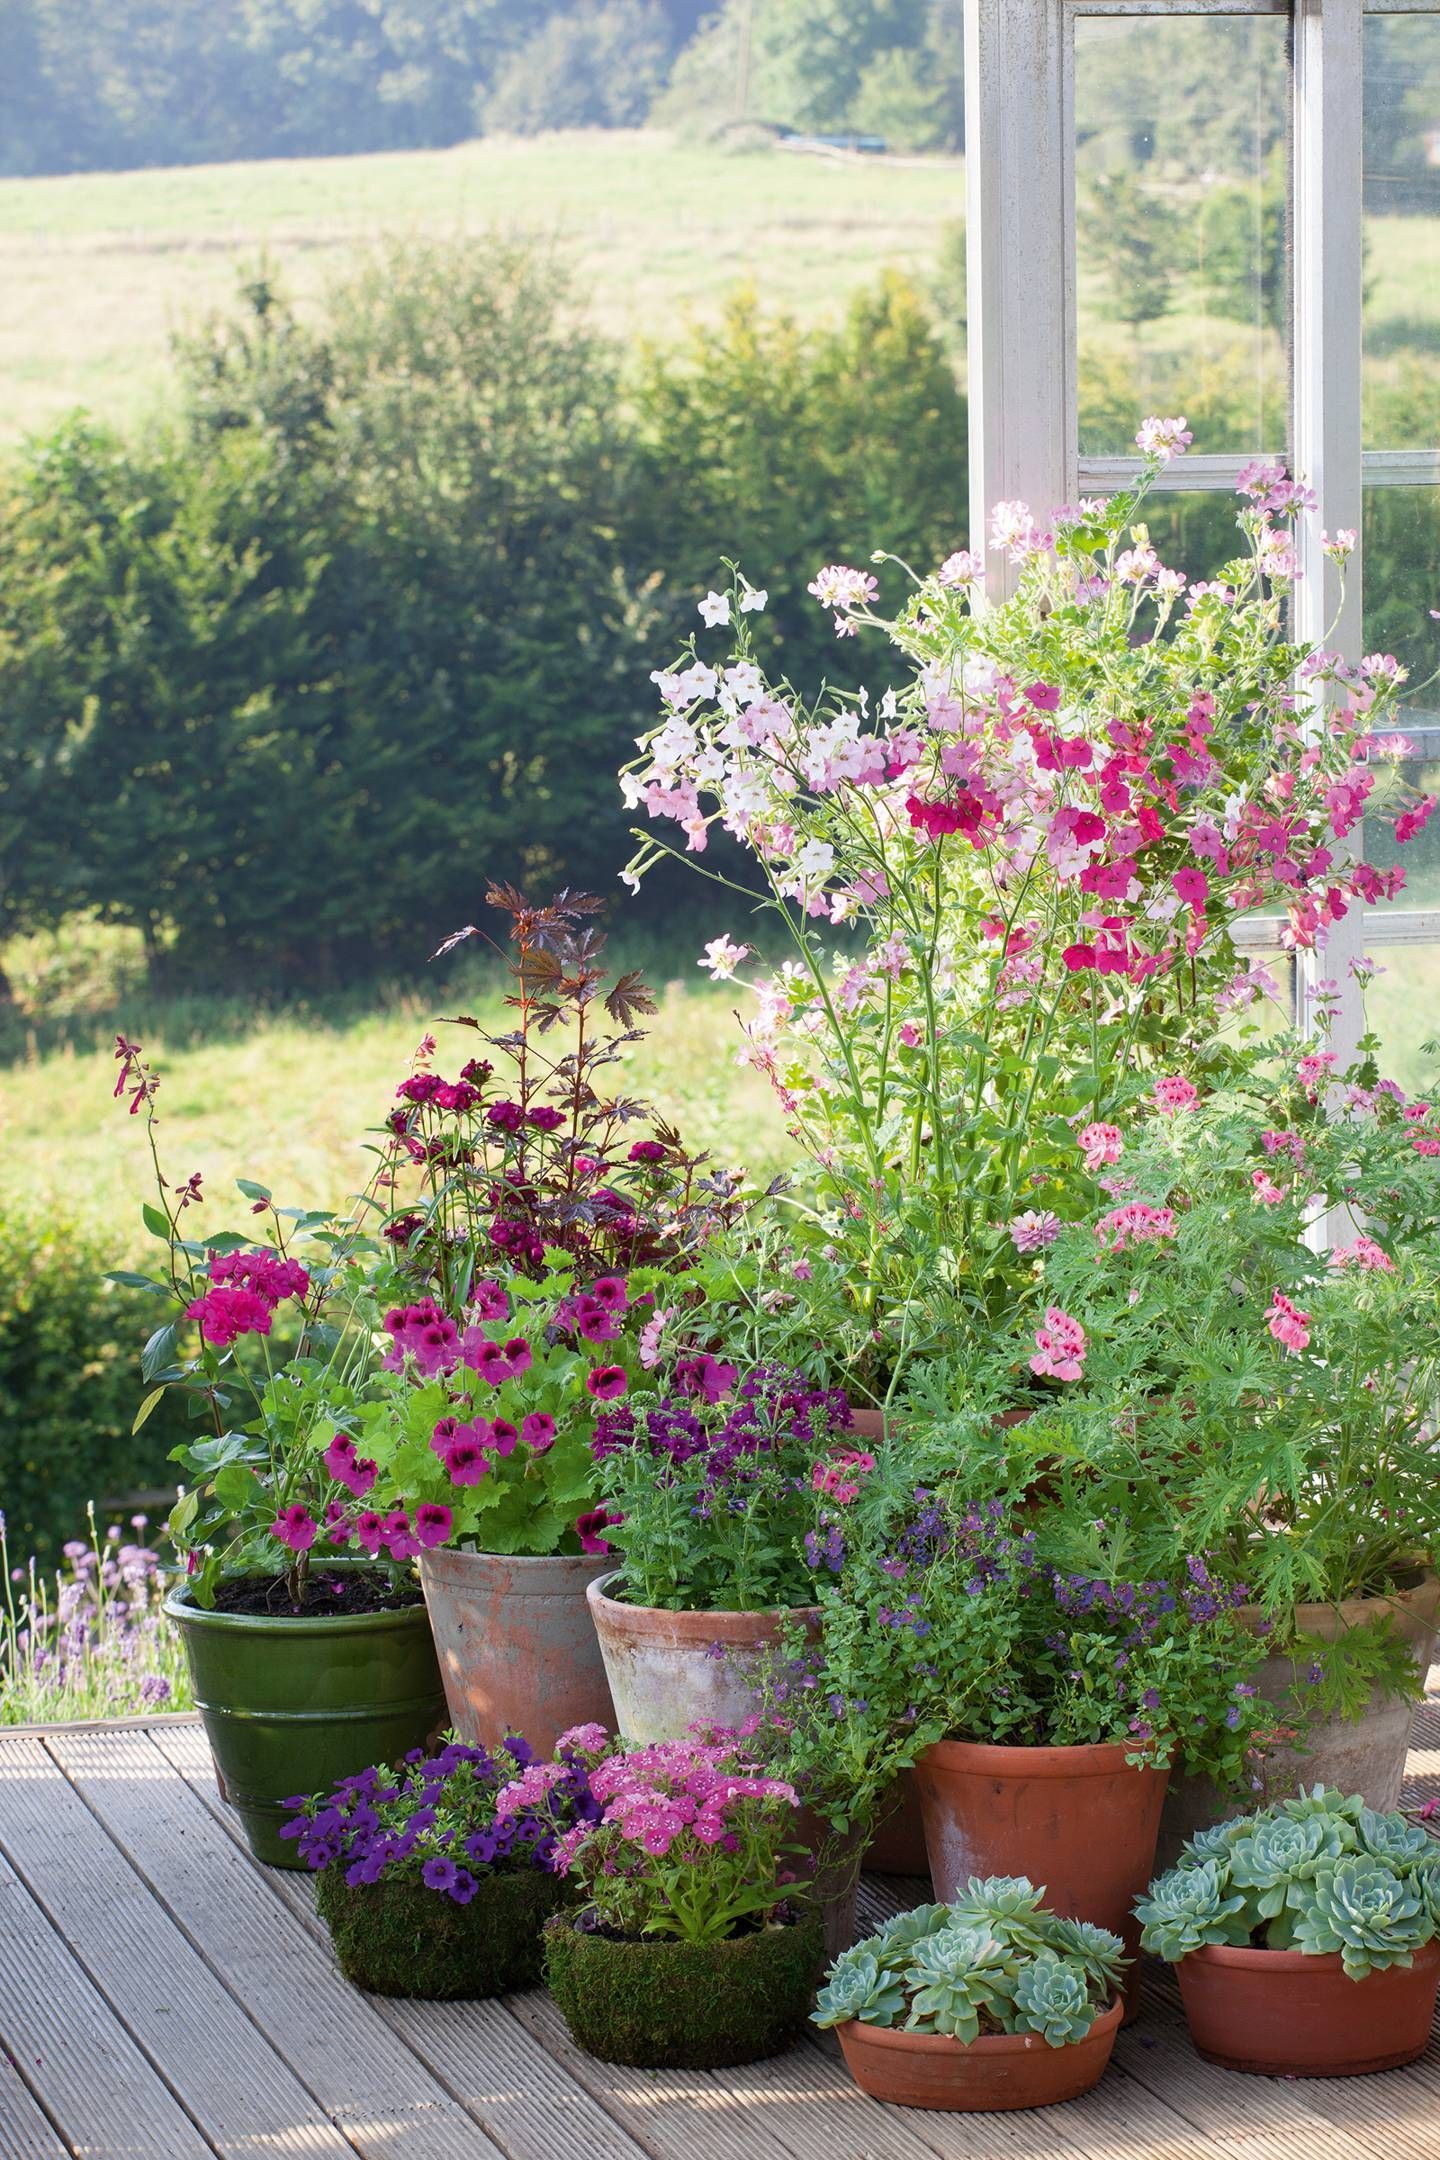 23 decorating garden pots
 ideas